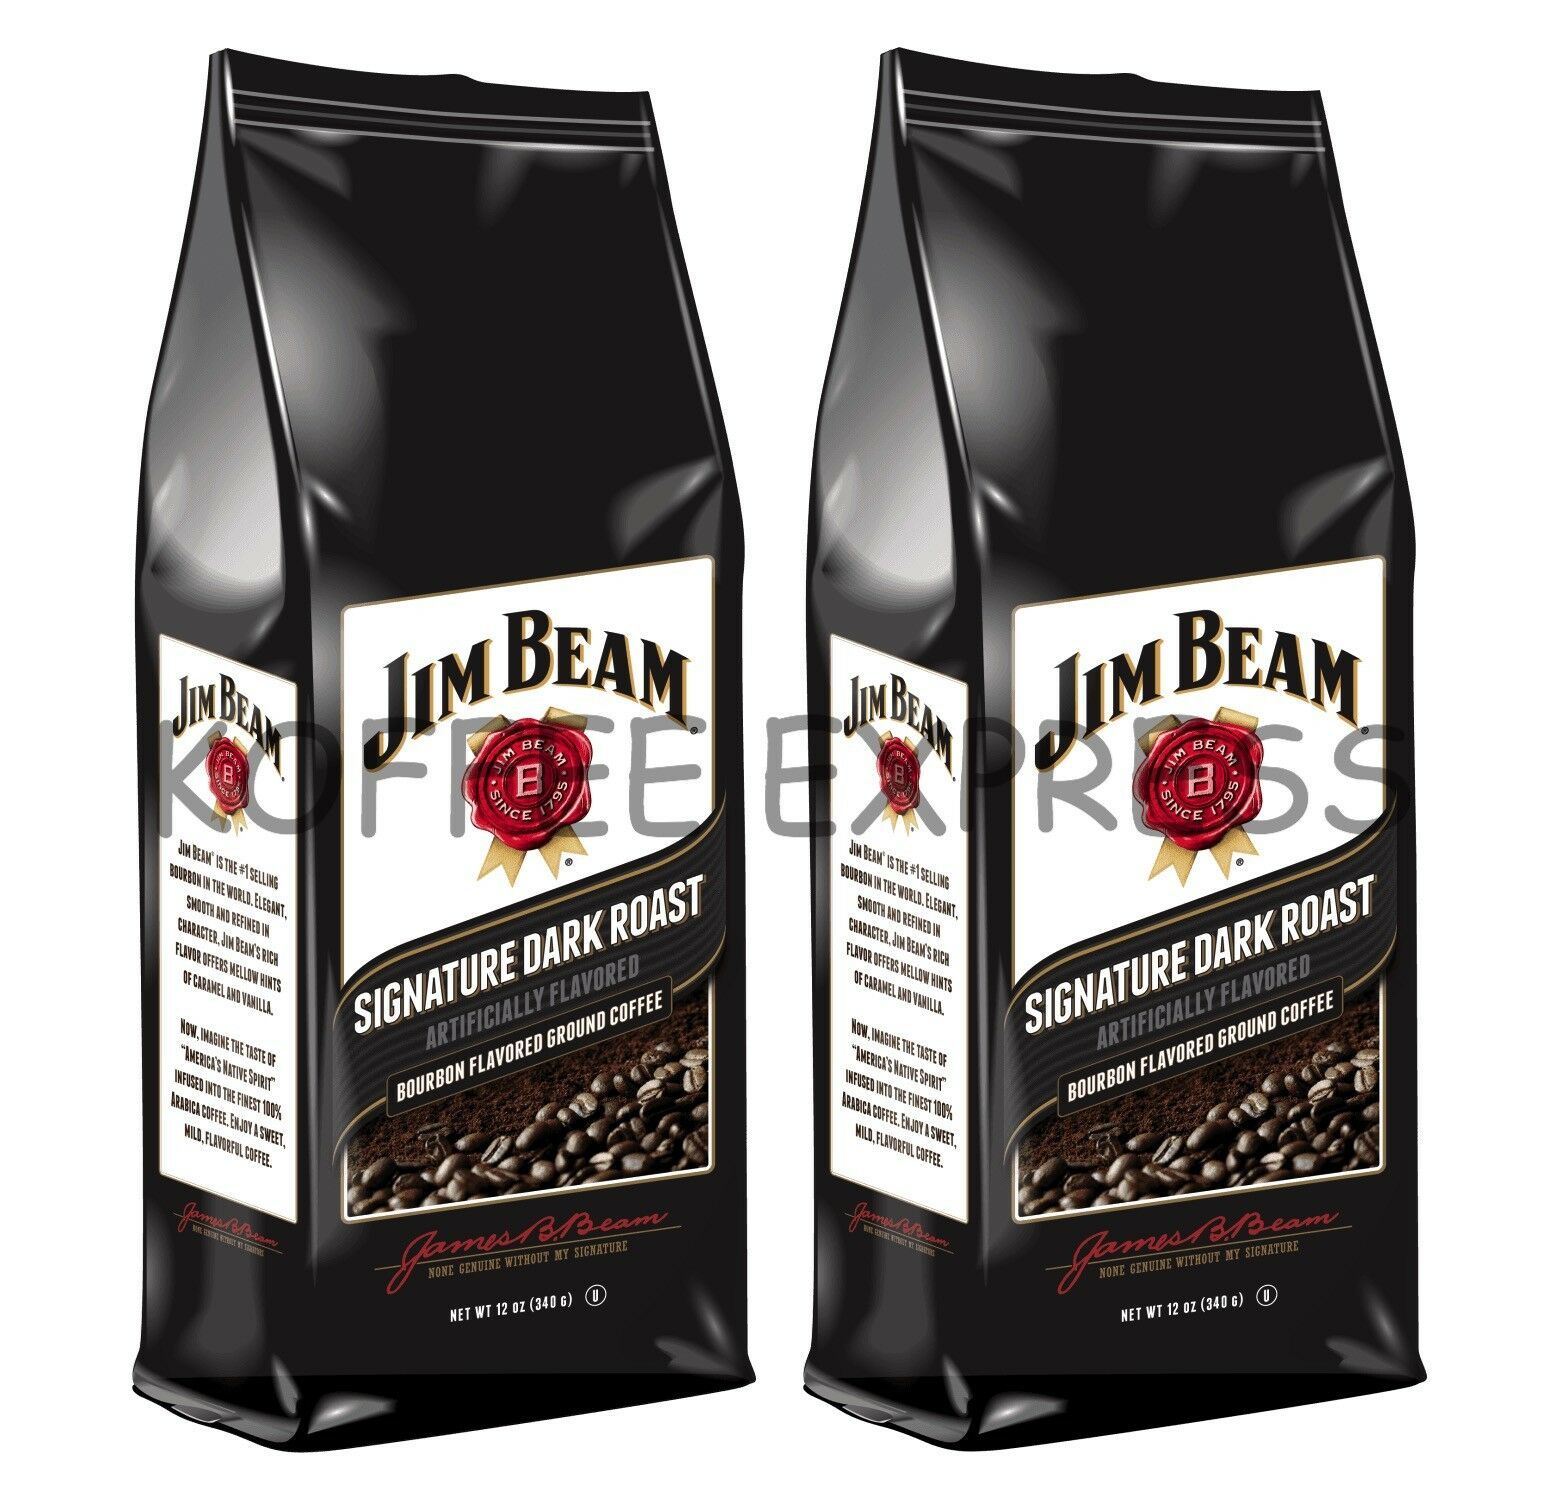 Primary image for Jim Beam Signature Dark Roast Bourbon Flavored Ground Coffee, 2 bags/12 oz each